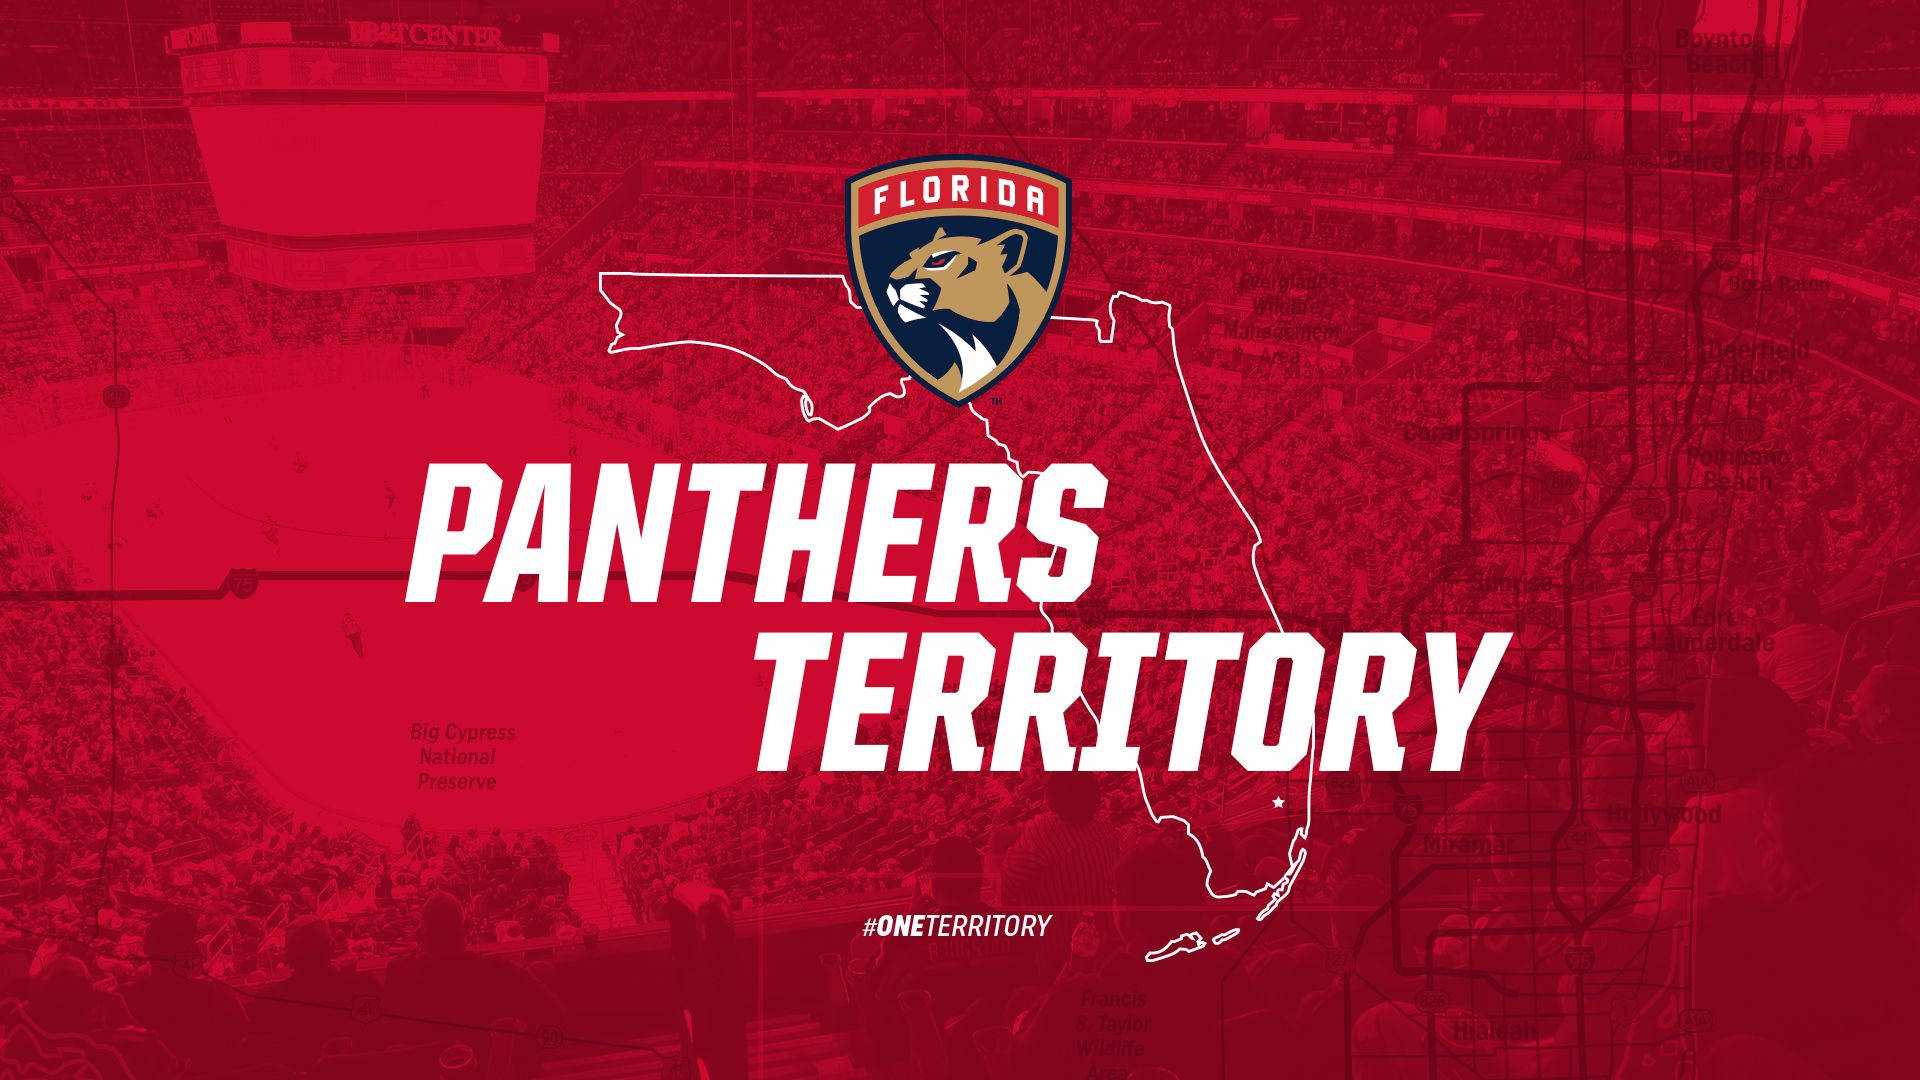 Territoriode Florida Panthers En Rojo. Fondo de pantalla